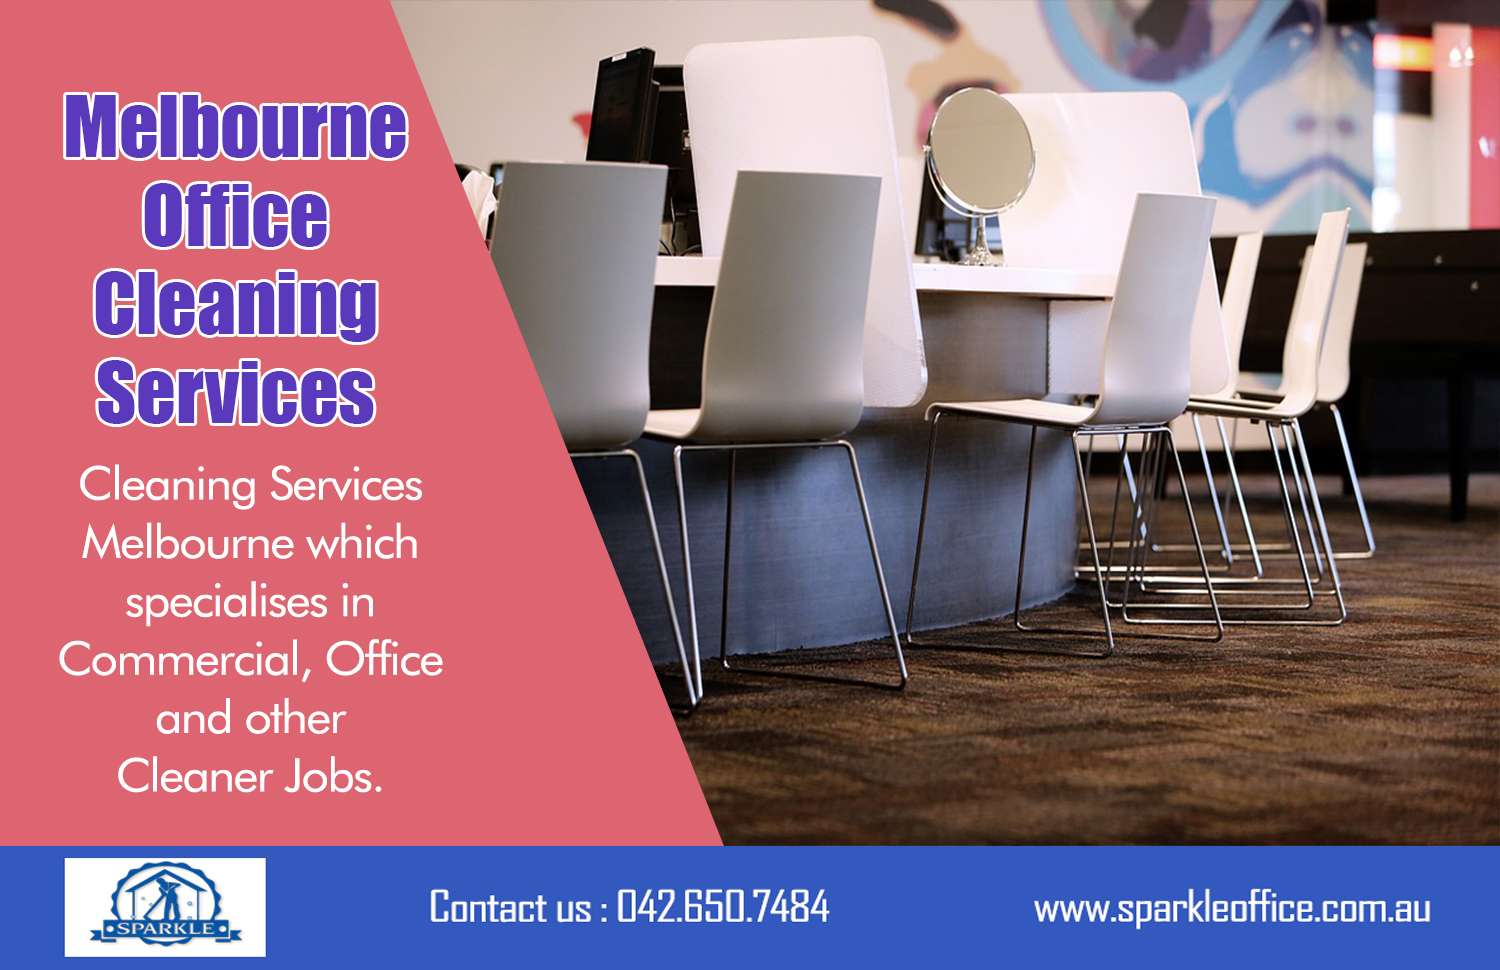 Melbourne office cleaning services| Call Us - 042 650 7484  | sparkleoffice.com.au